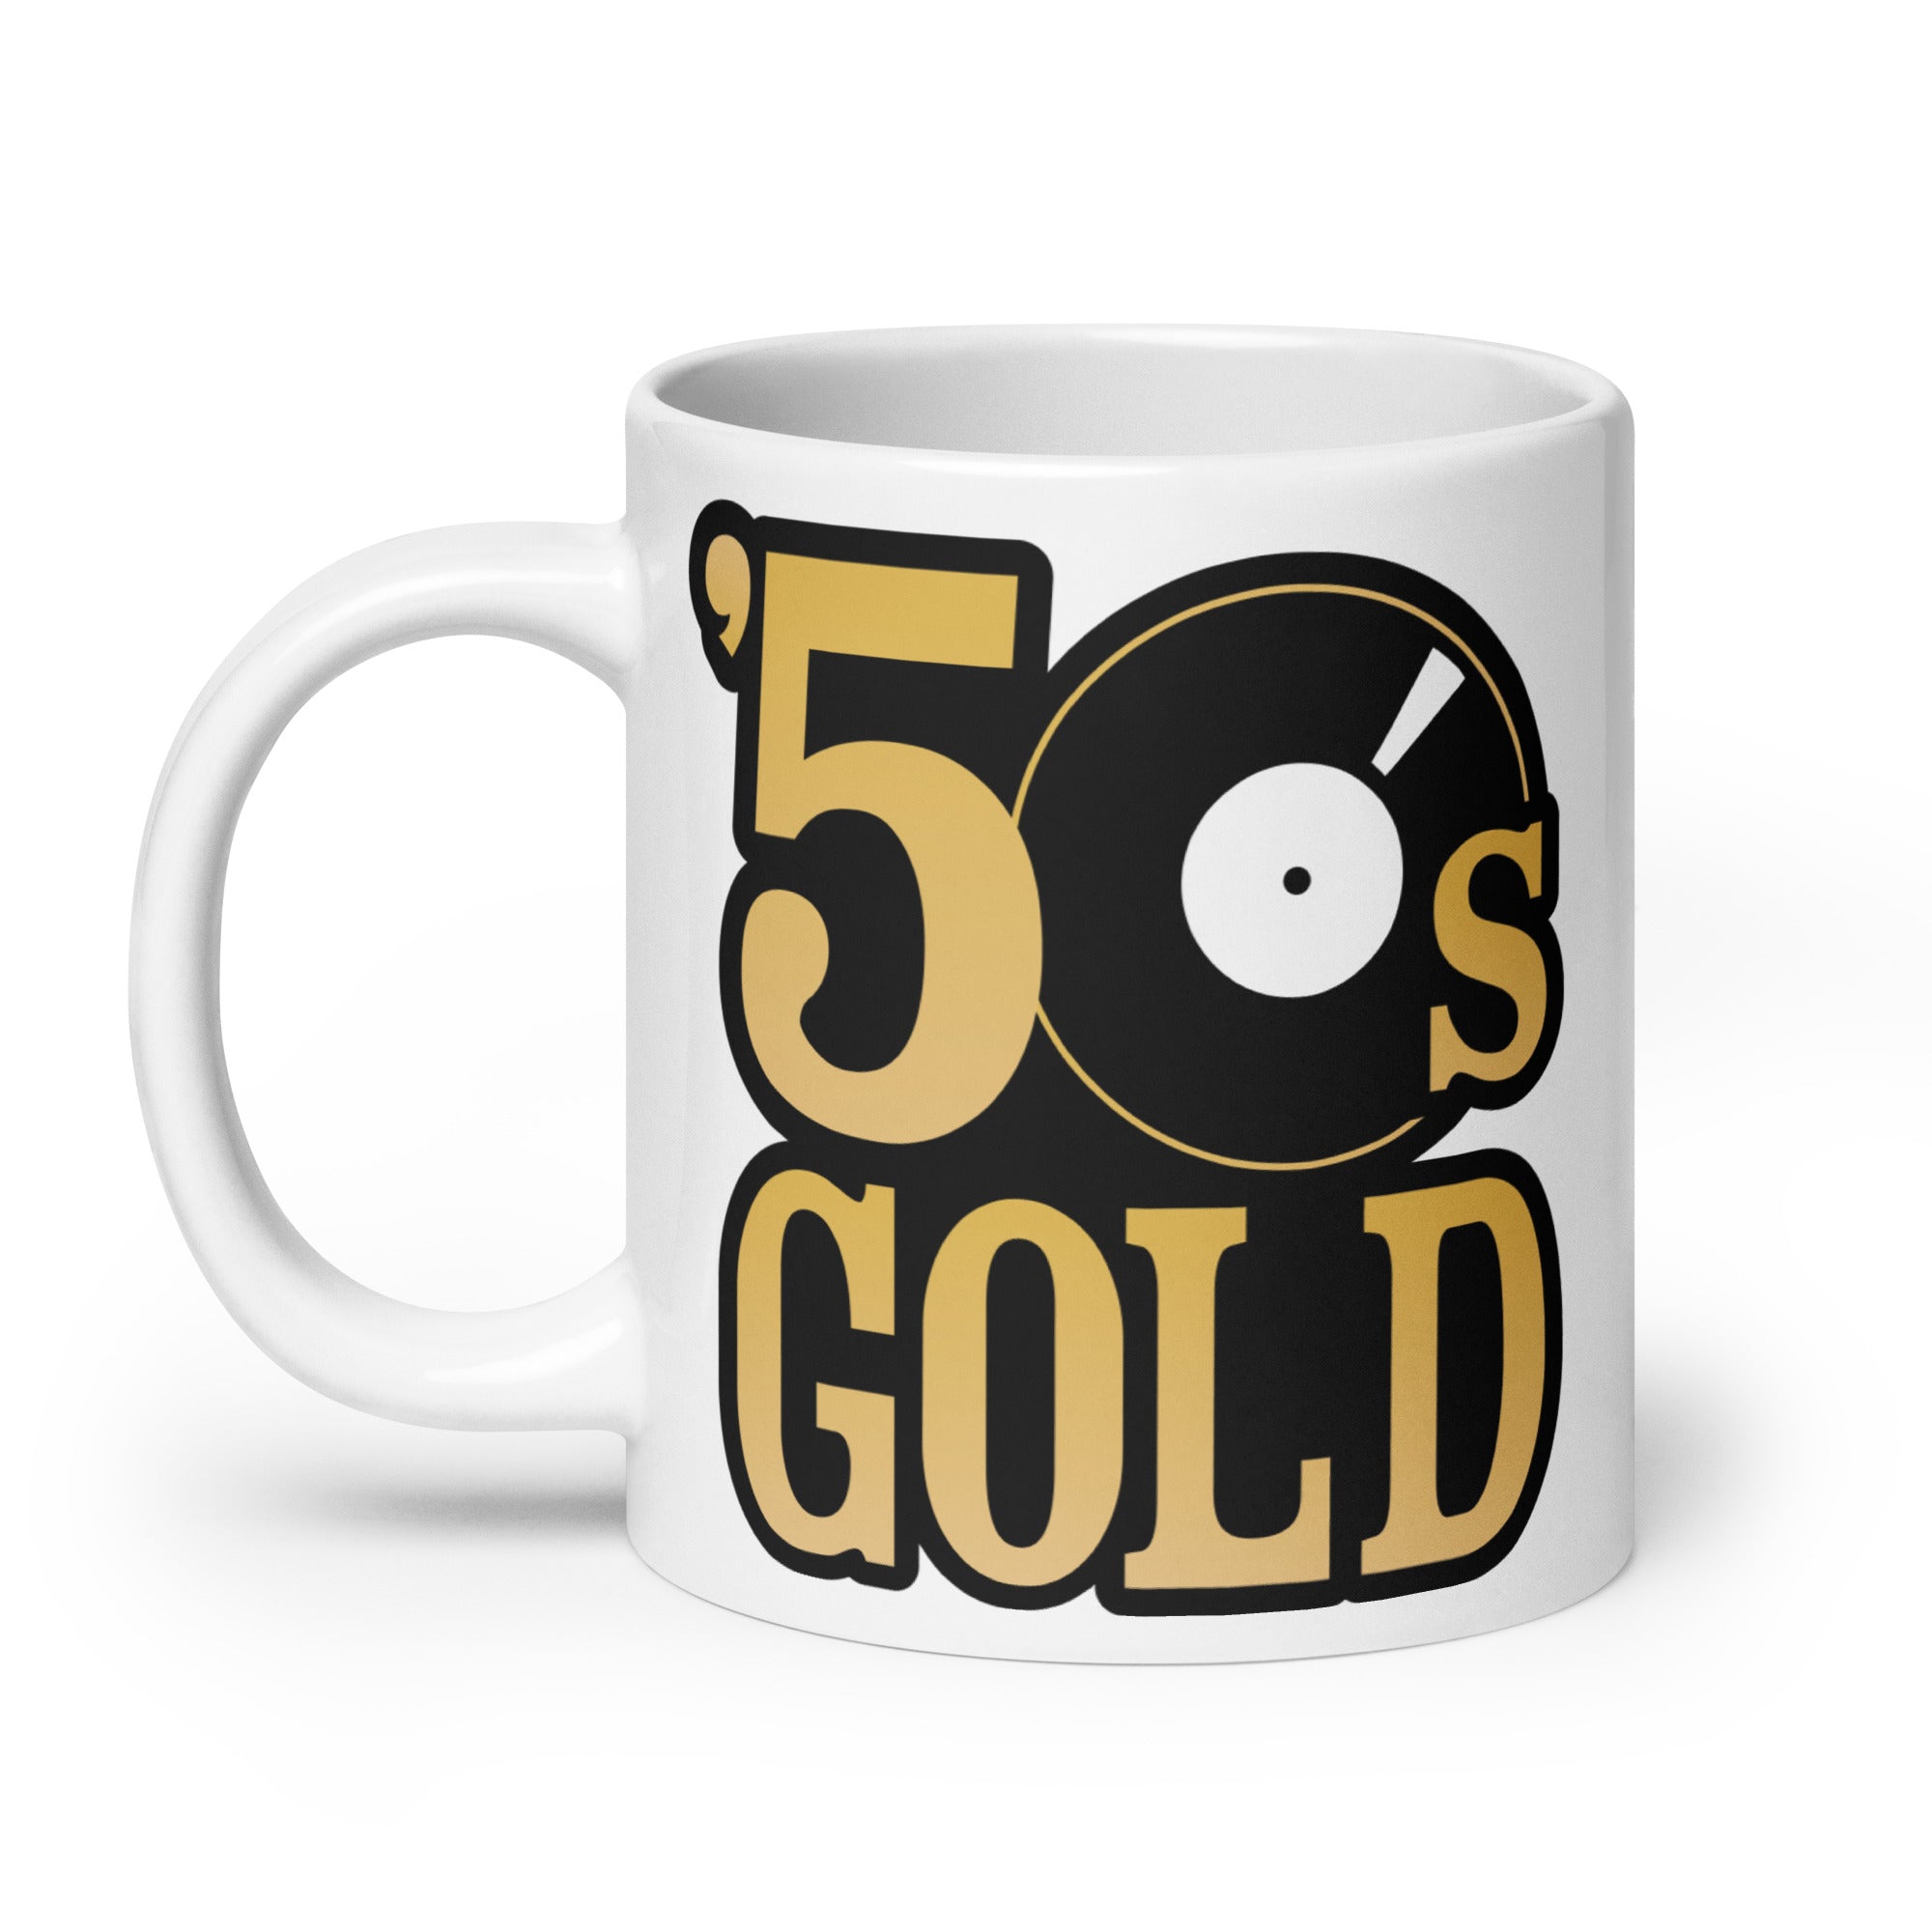 50s Gold: Mug